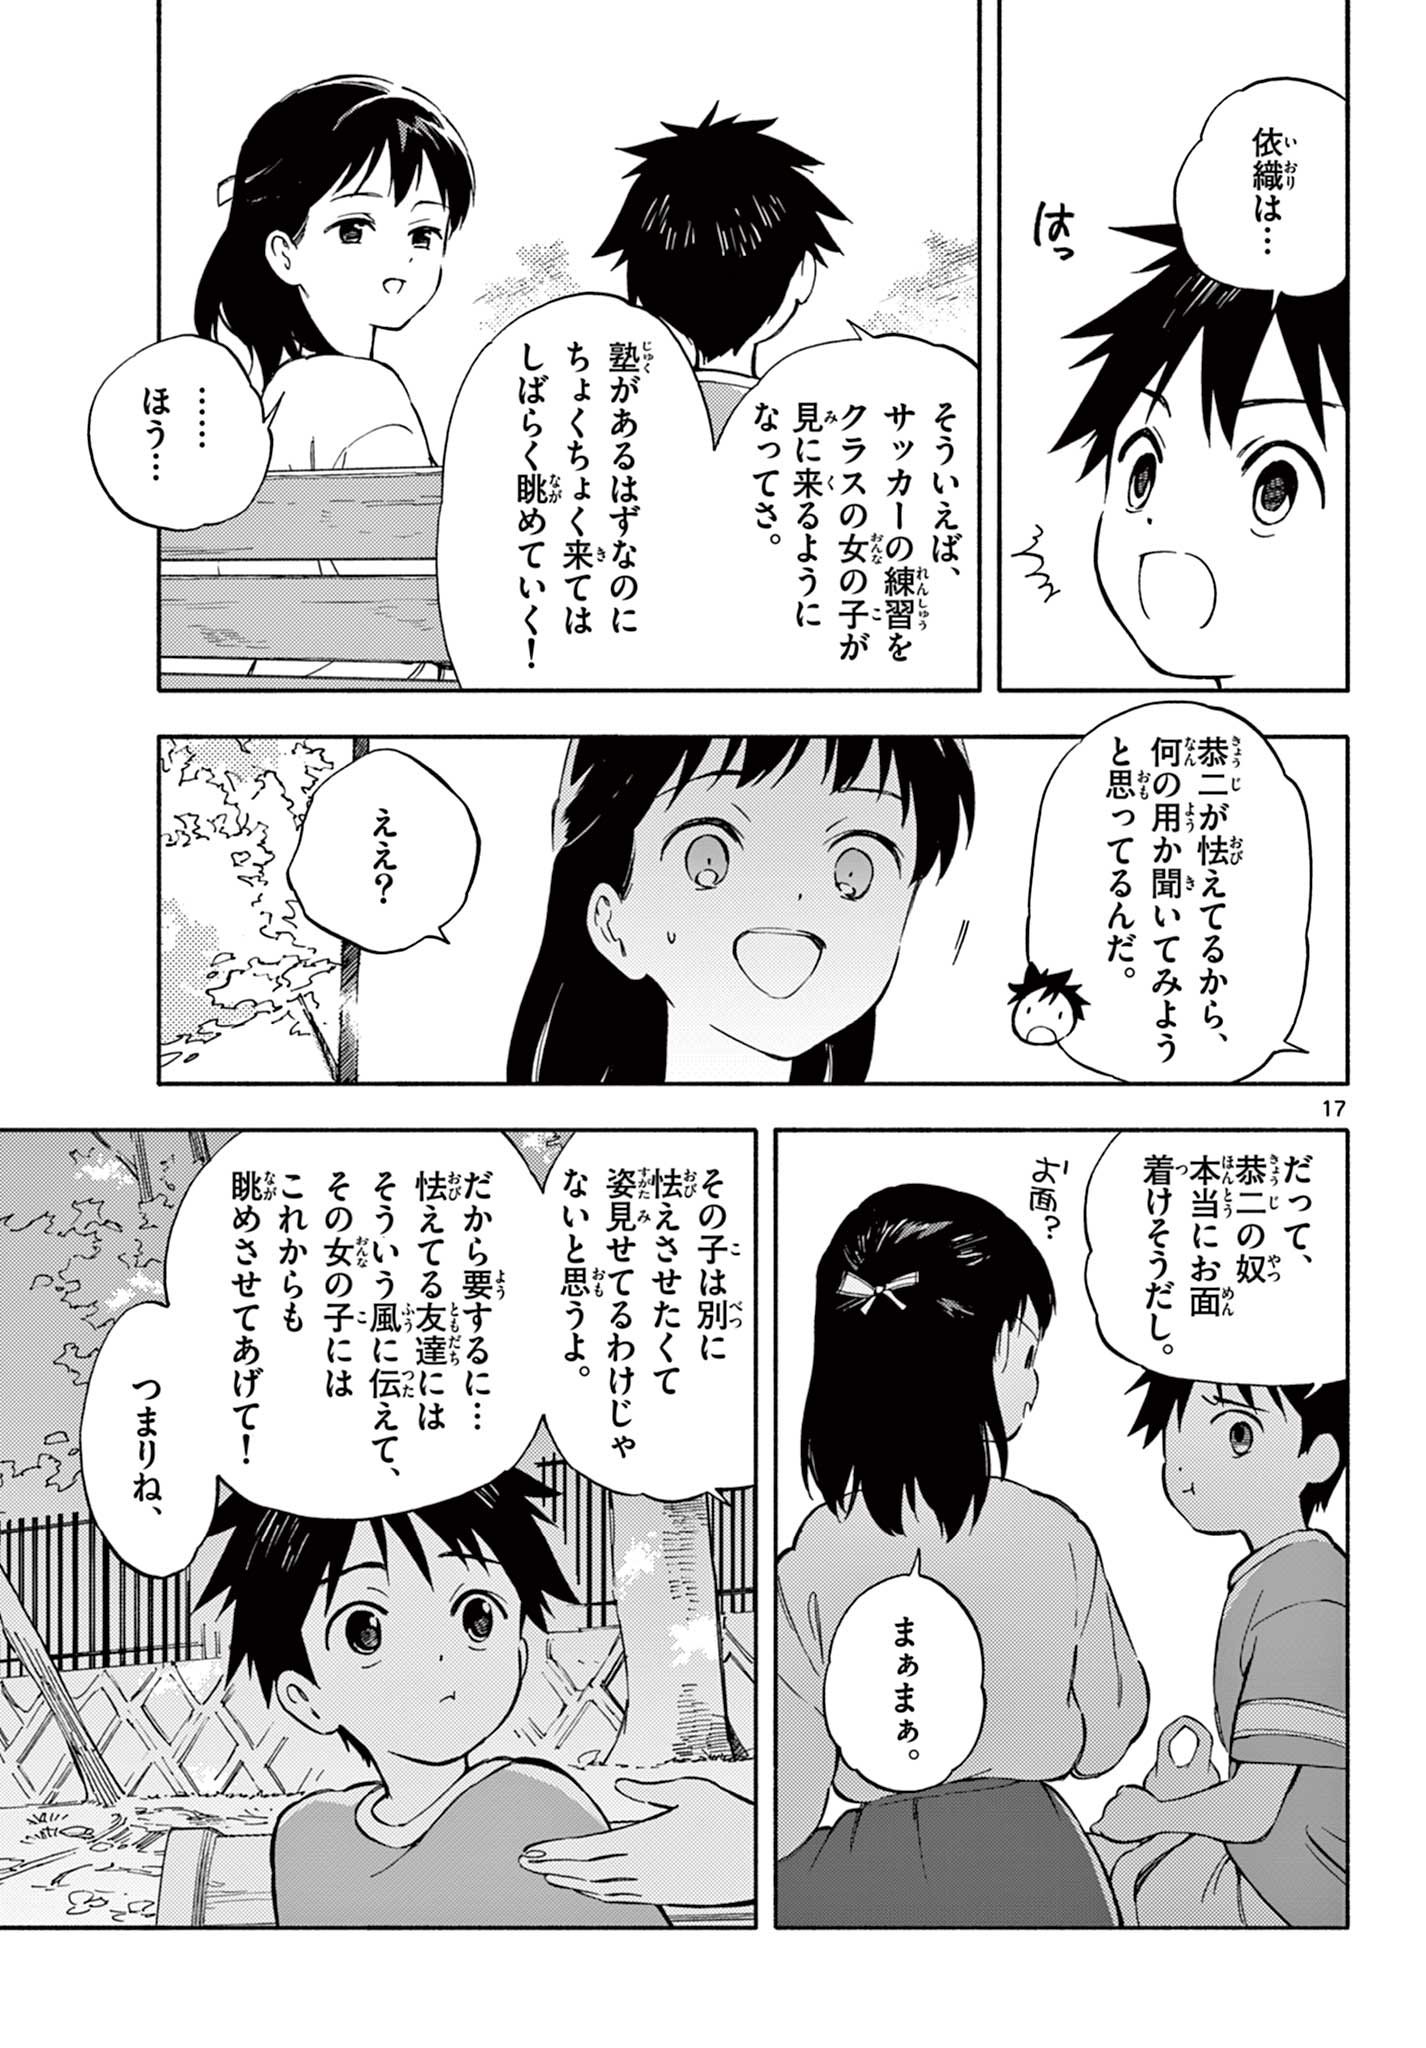 Nami no Shijima no Horizont - Chapter 9.2 - Page 5